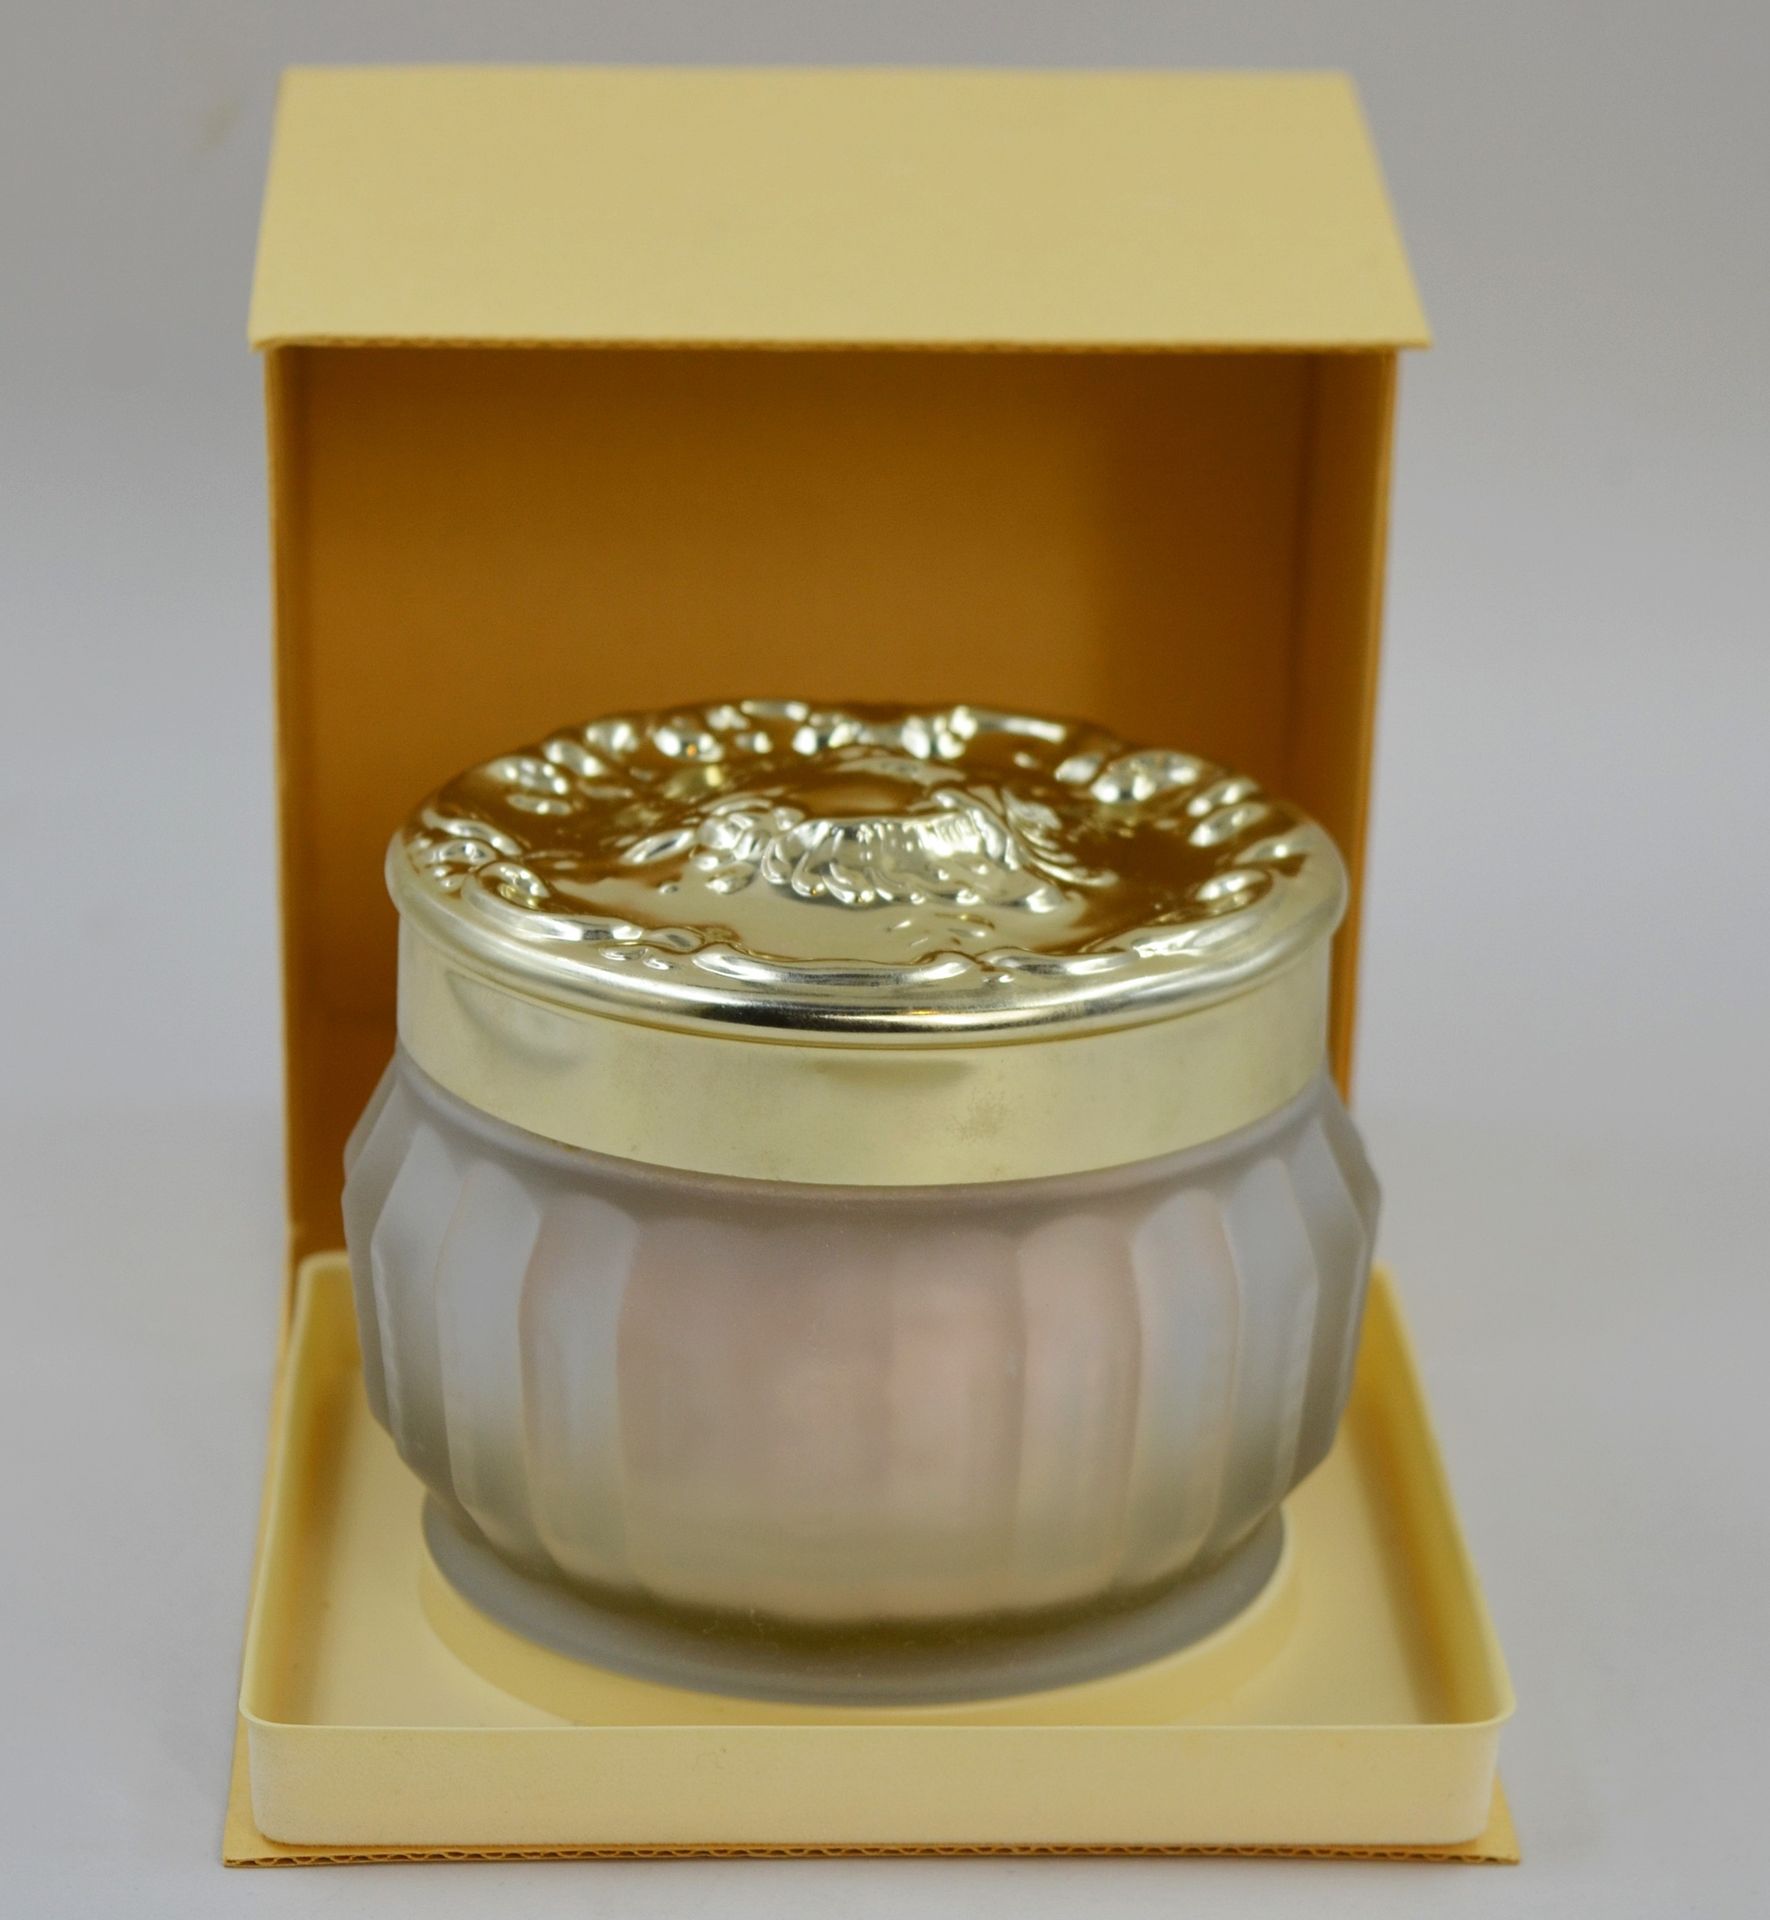 Null ESTEE LAUDER "Re-Nutriv

玻璃罐里的细粉和它的泡芙。有标题的盒子。